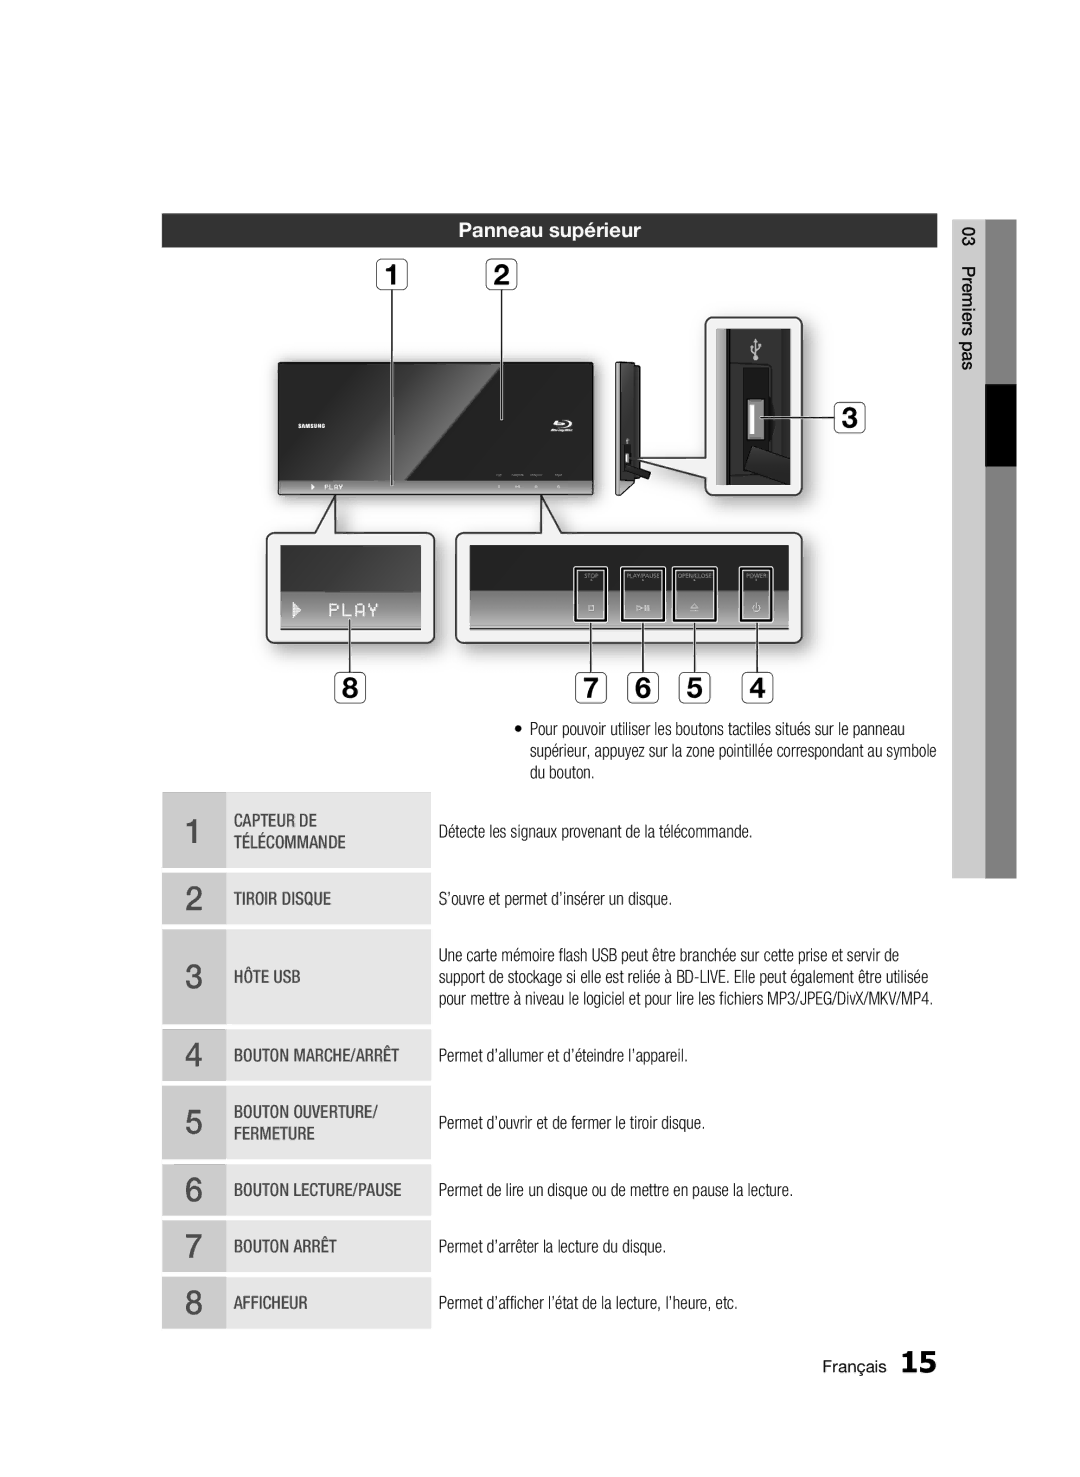 Samsung BD-C7500/EDC, BD-C7500/XEF manual F e d, Panneau supérieur 